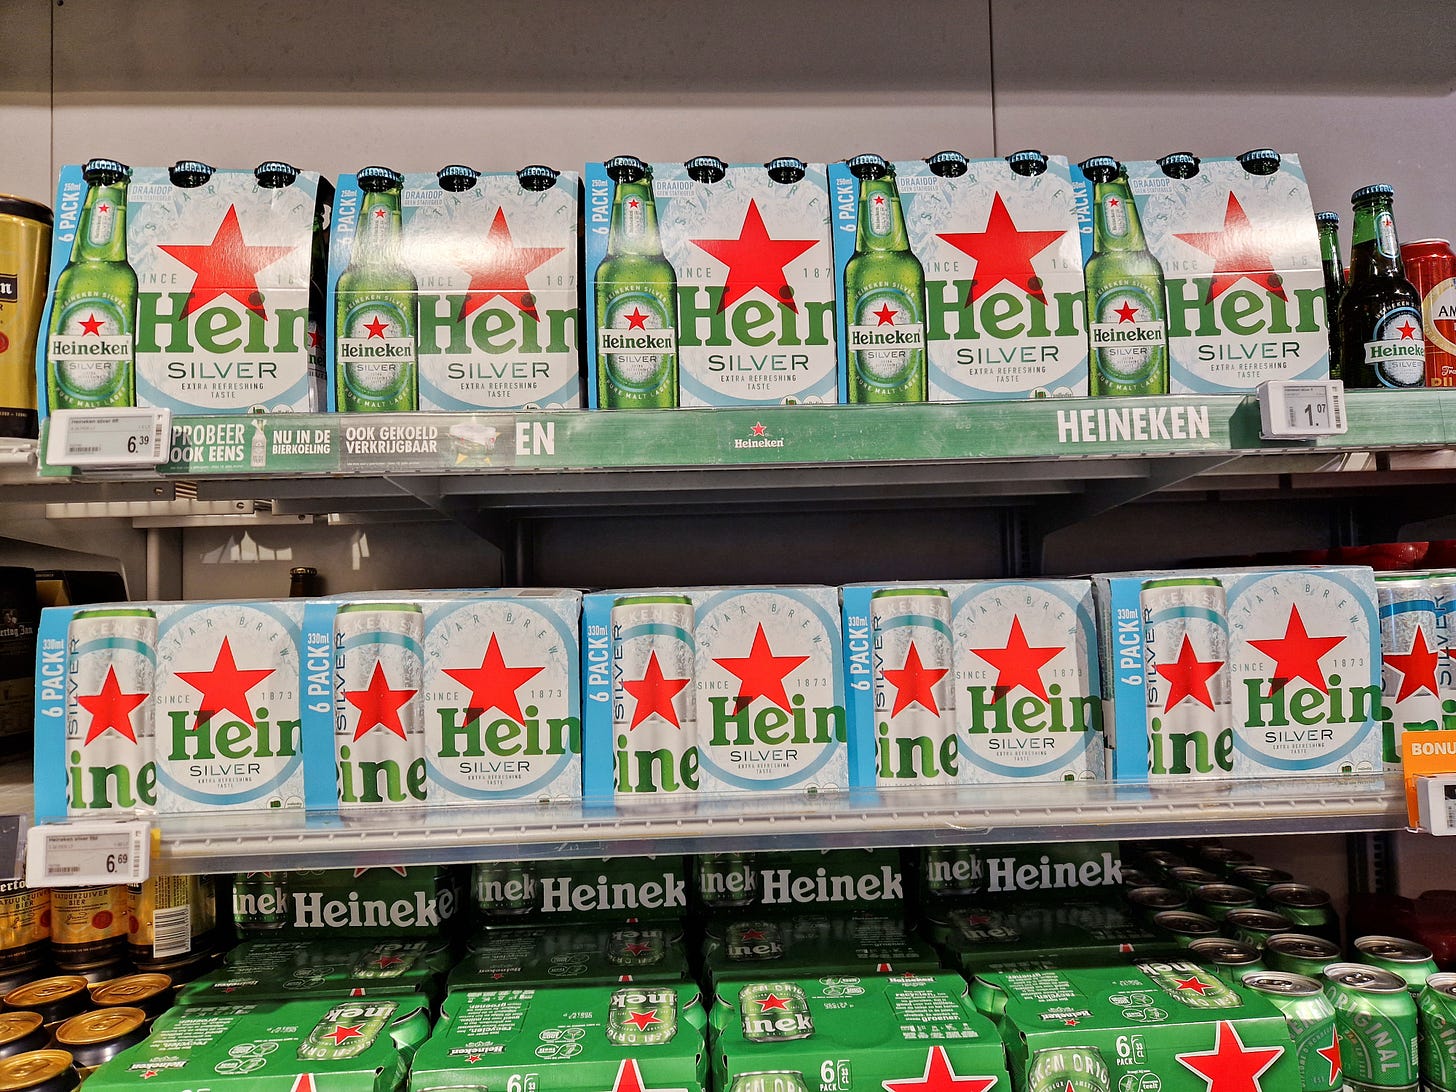 Bottles of Heineken Silver are seen on display at a supermarket in Amsterdam